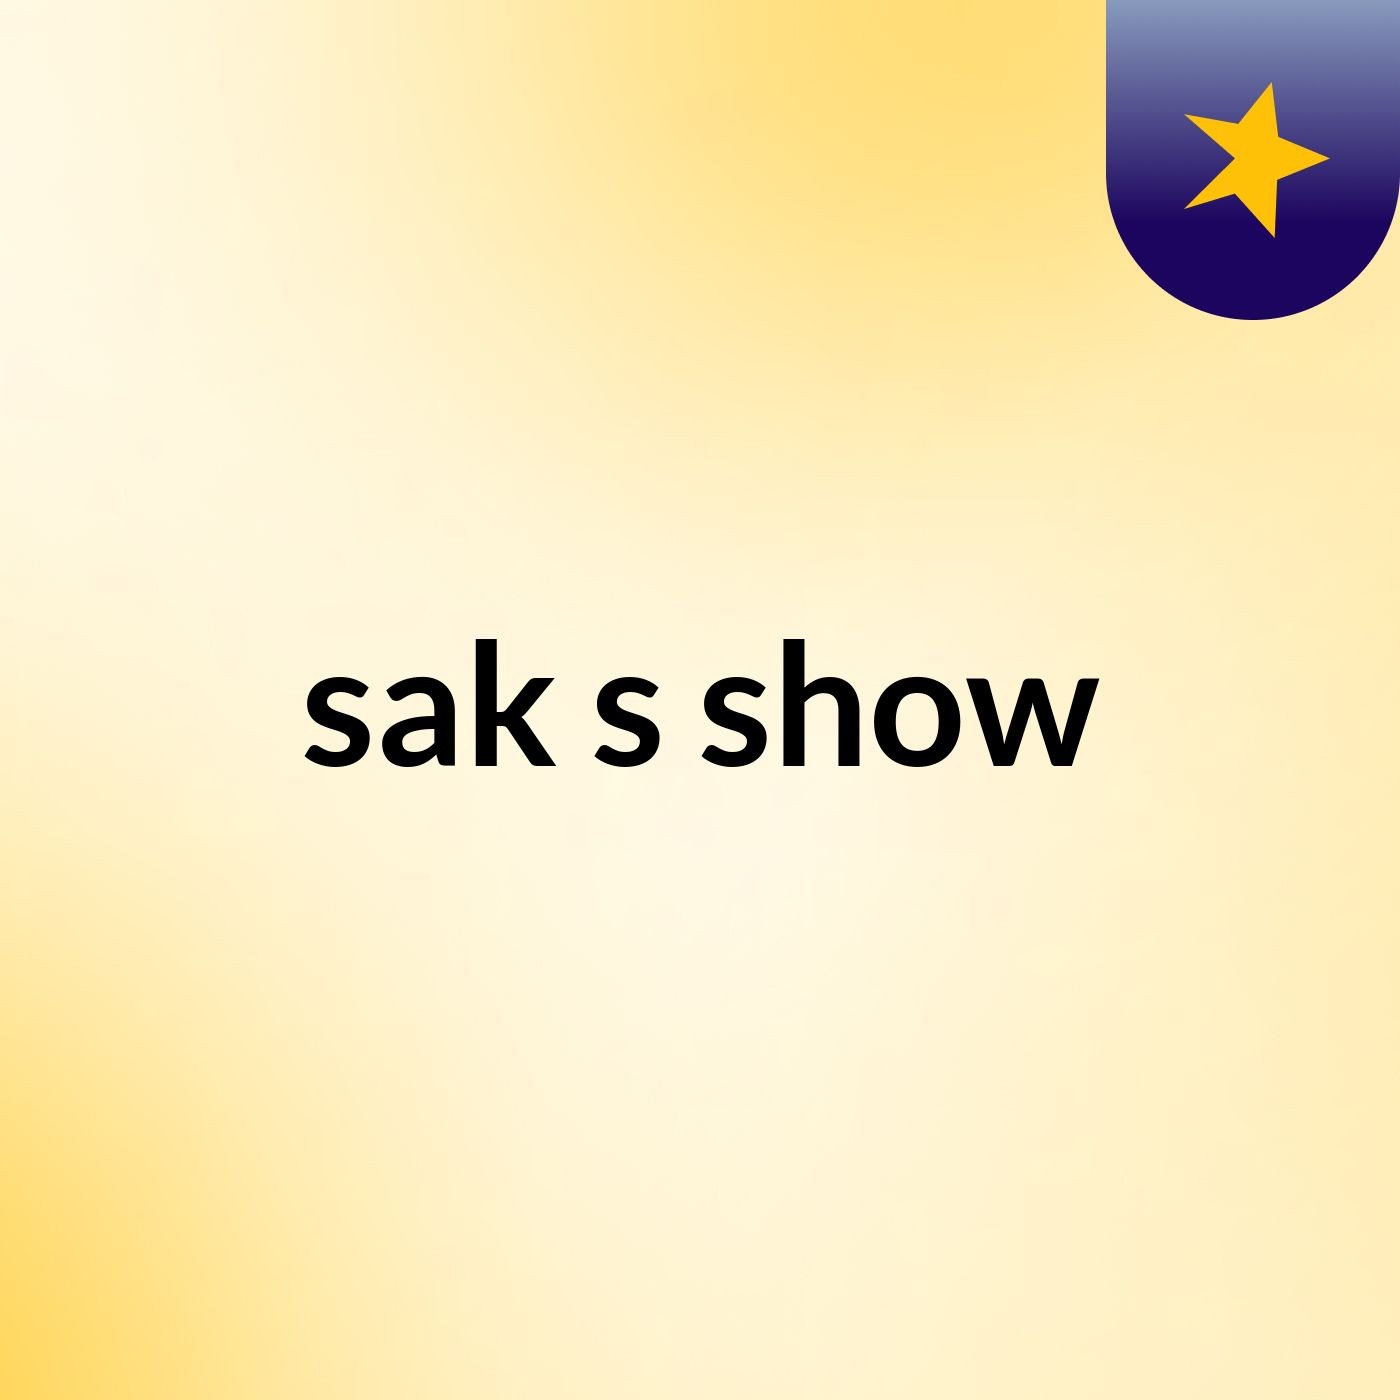 sak's show